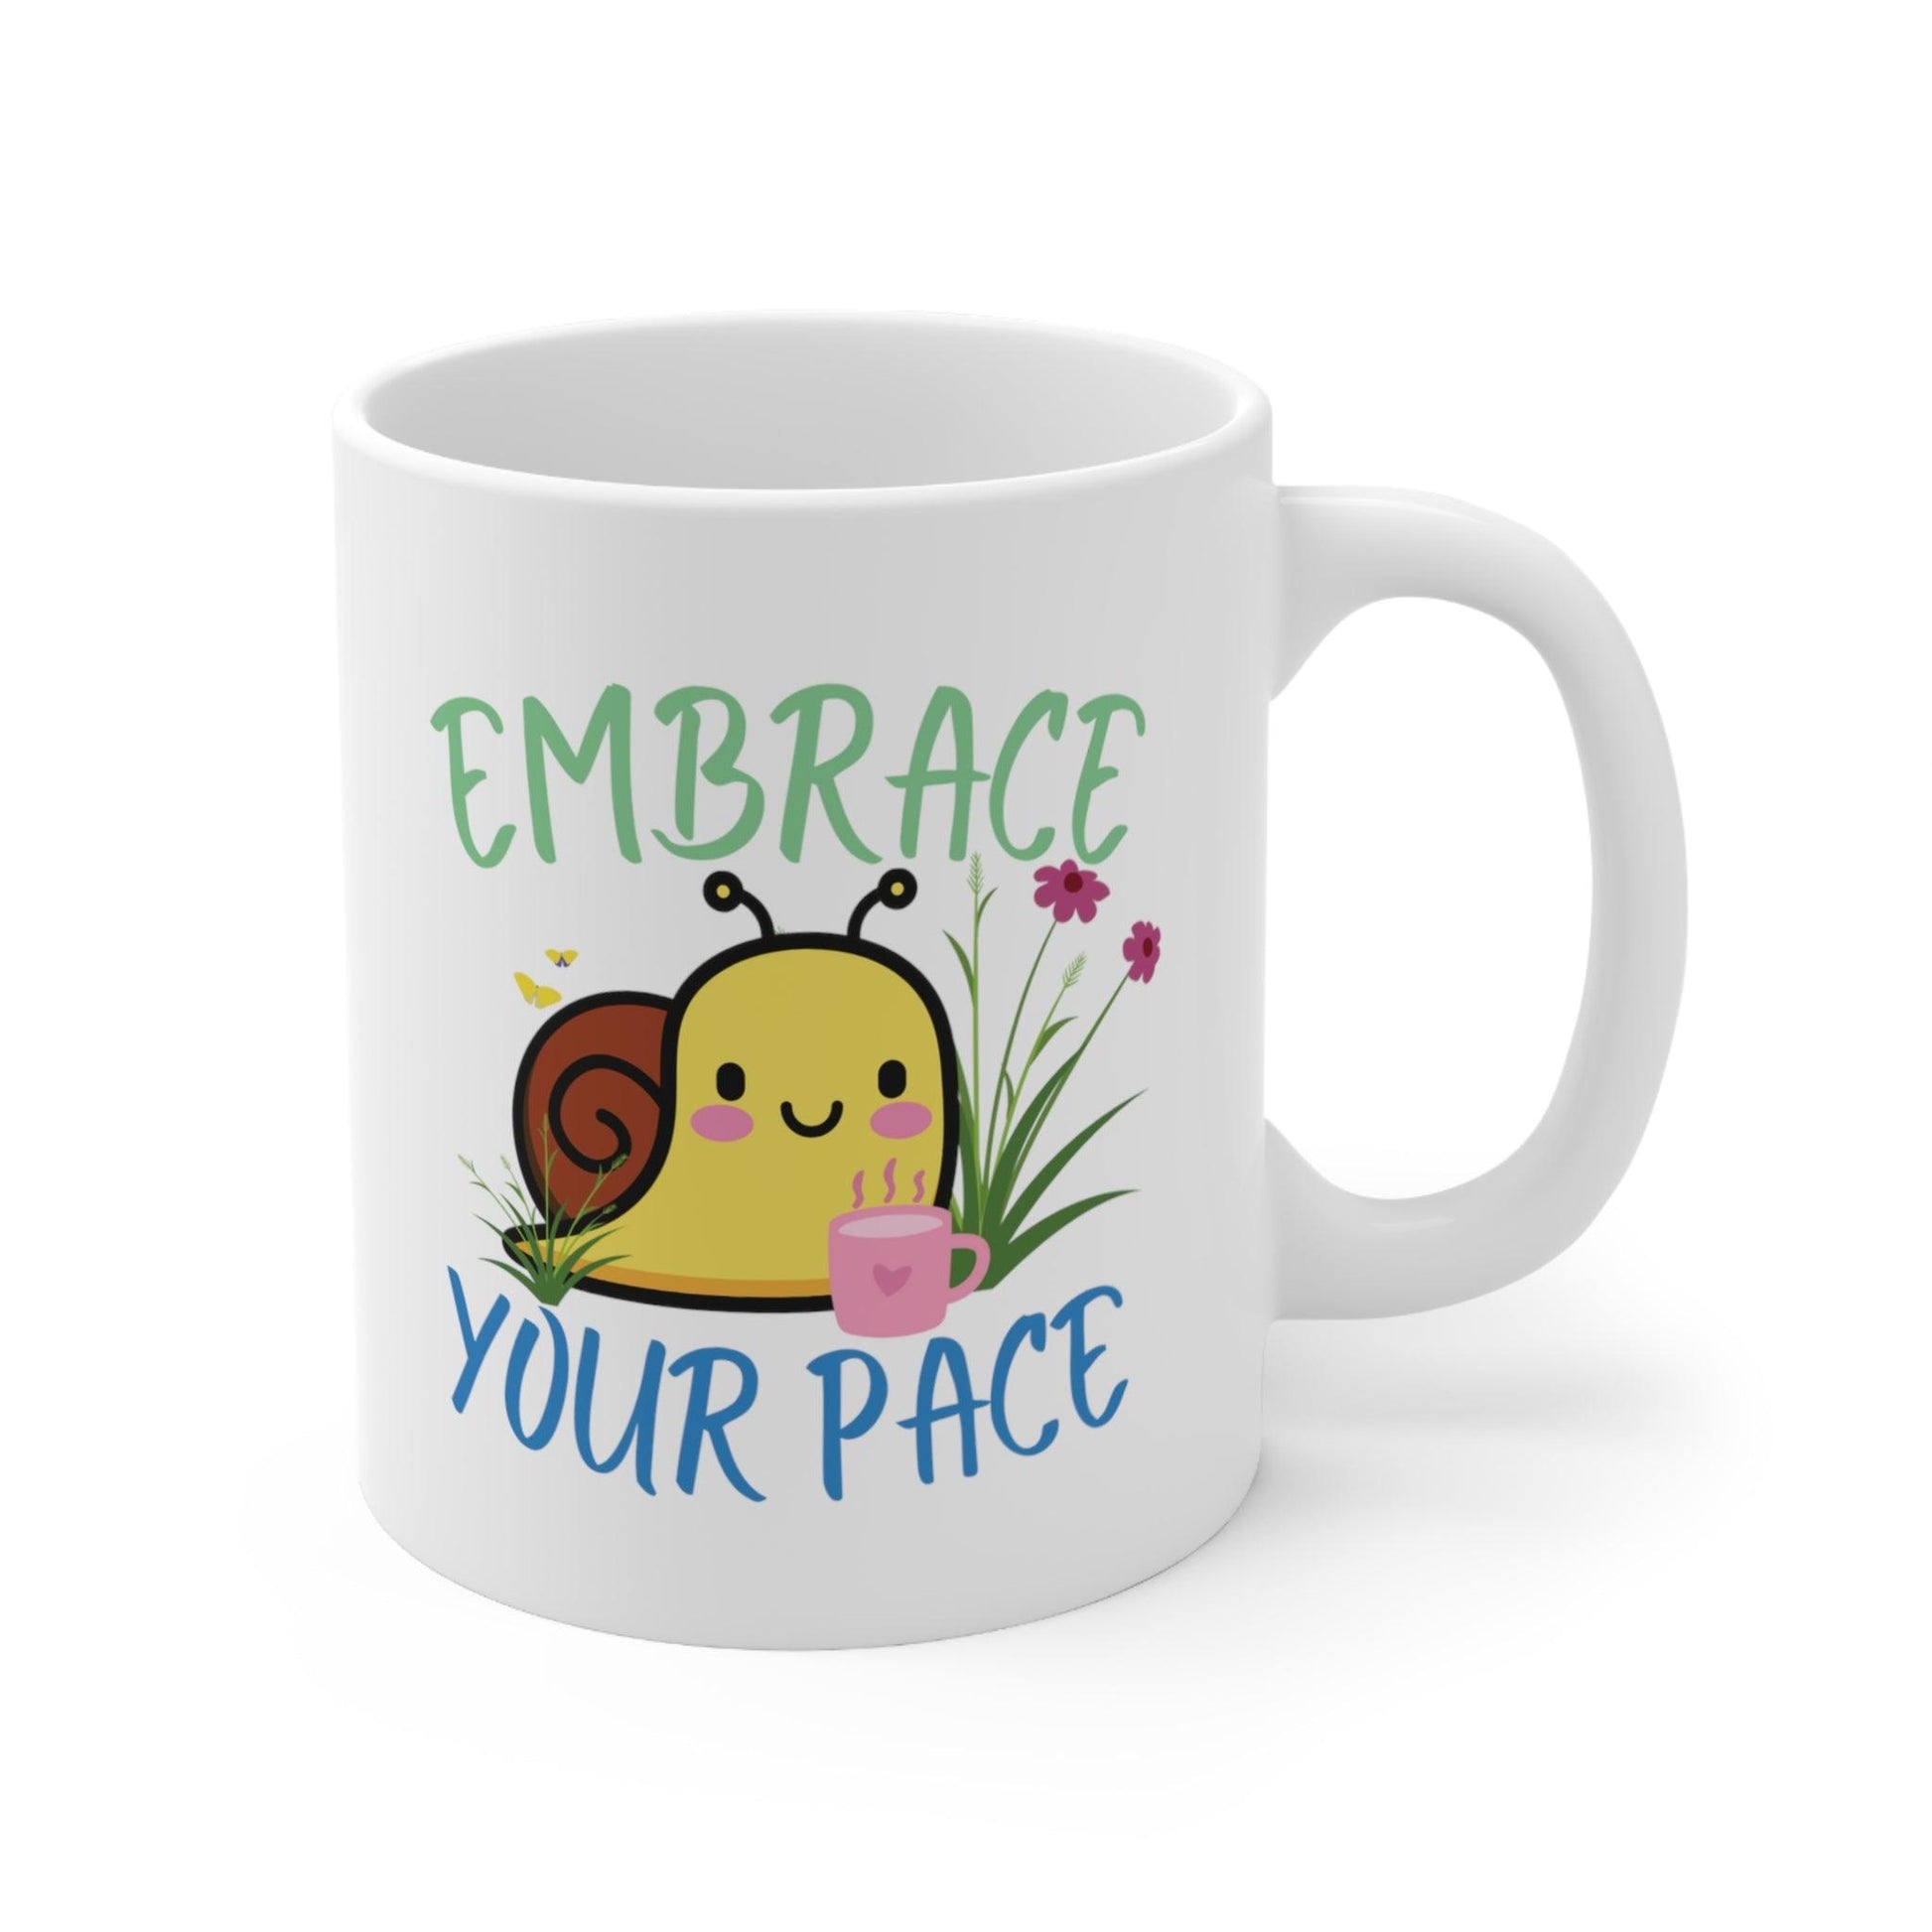 Embrace Your Pace Snail Mug - Cute Cartoon Design for ADHD Awareness - Fidget and Focus